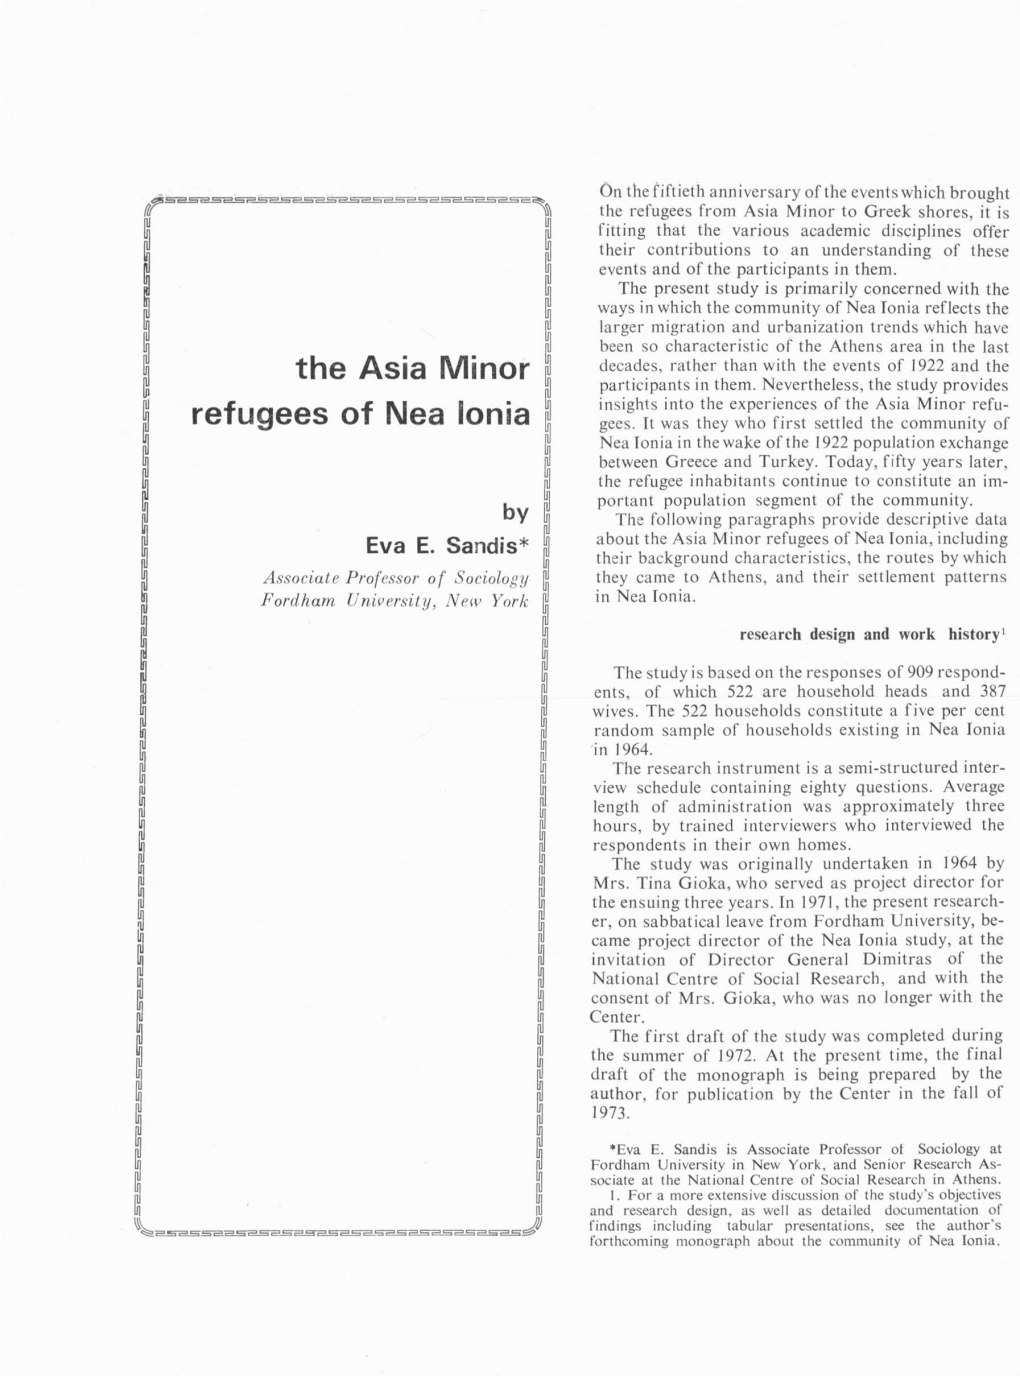 The Asia Minor Refugees of Nea Sonia